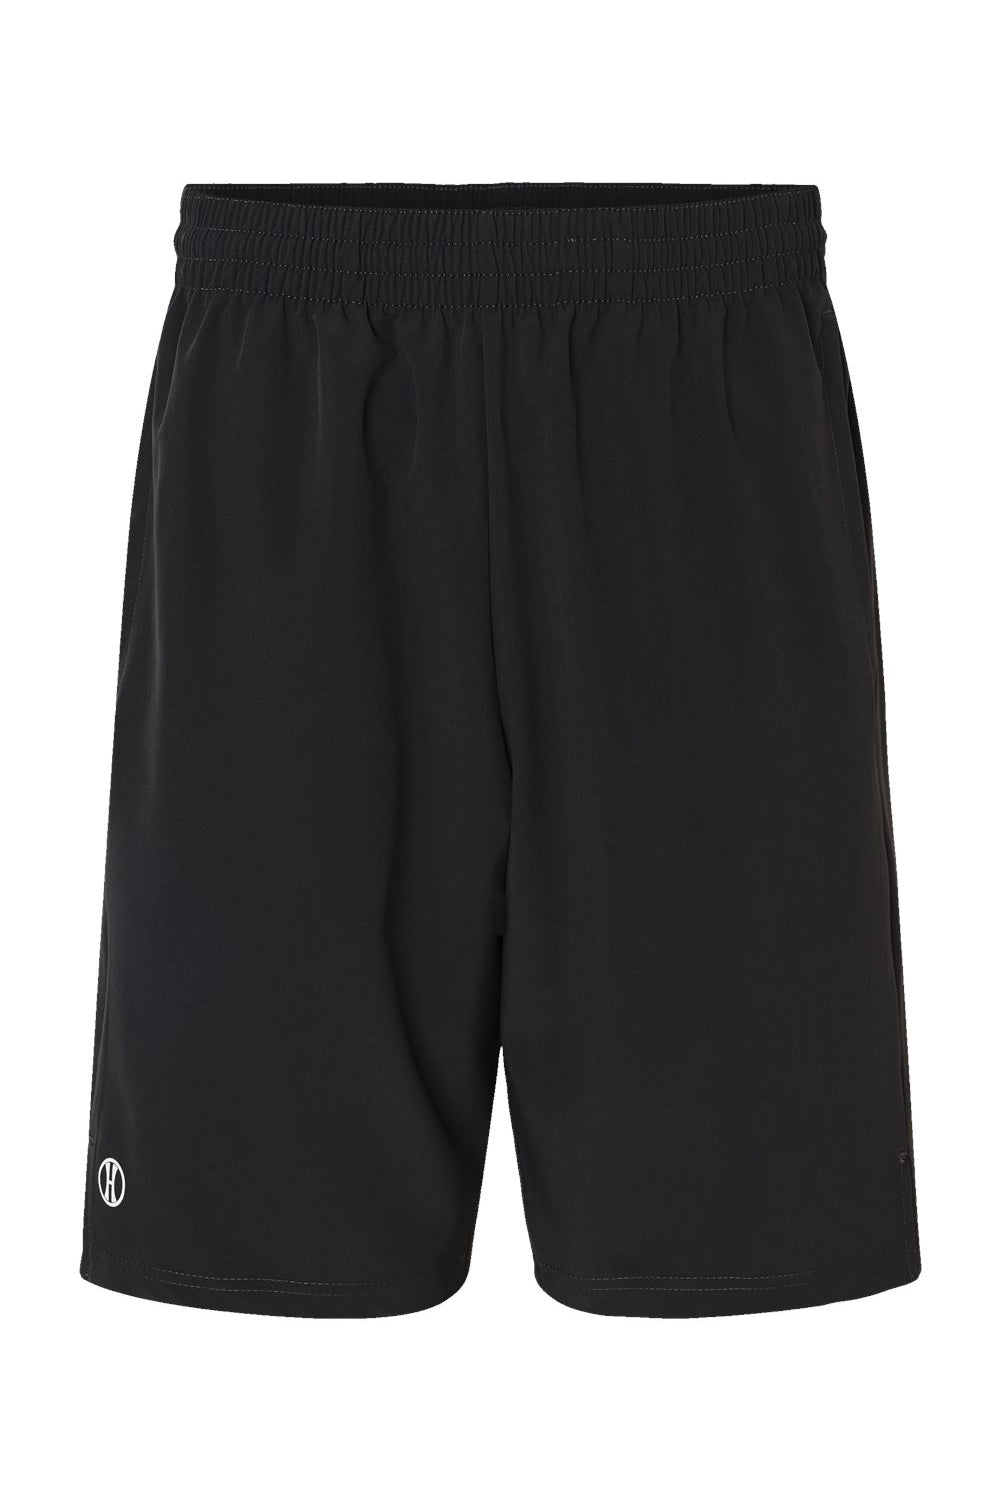 Holloway 229556 Mens Weld Shorts w/ Pockets Black Flat Front